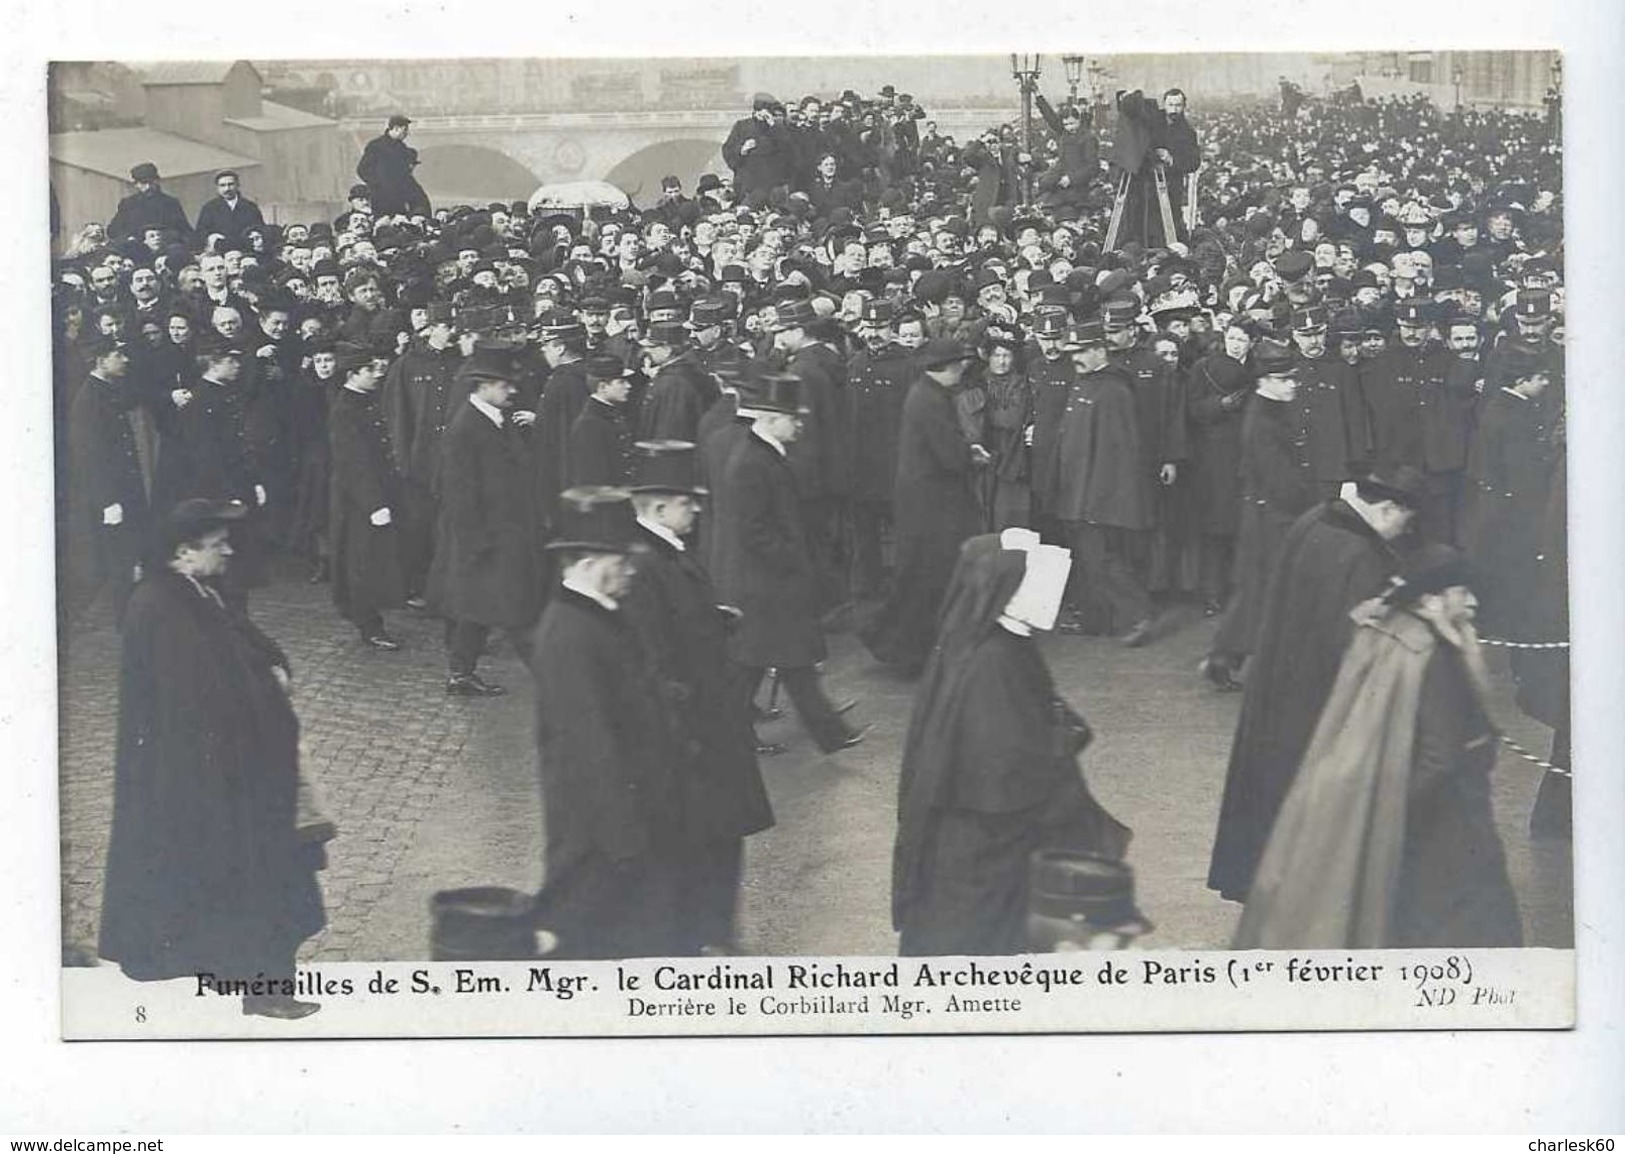 Carte - Photo - CPA - 75 - Paris - Obsèques - Cardinal Richard -1908 - Mgr Amette - Corbillard - Funeral